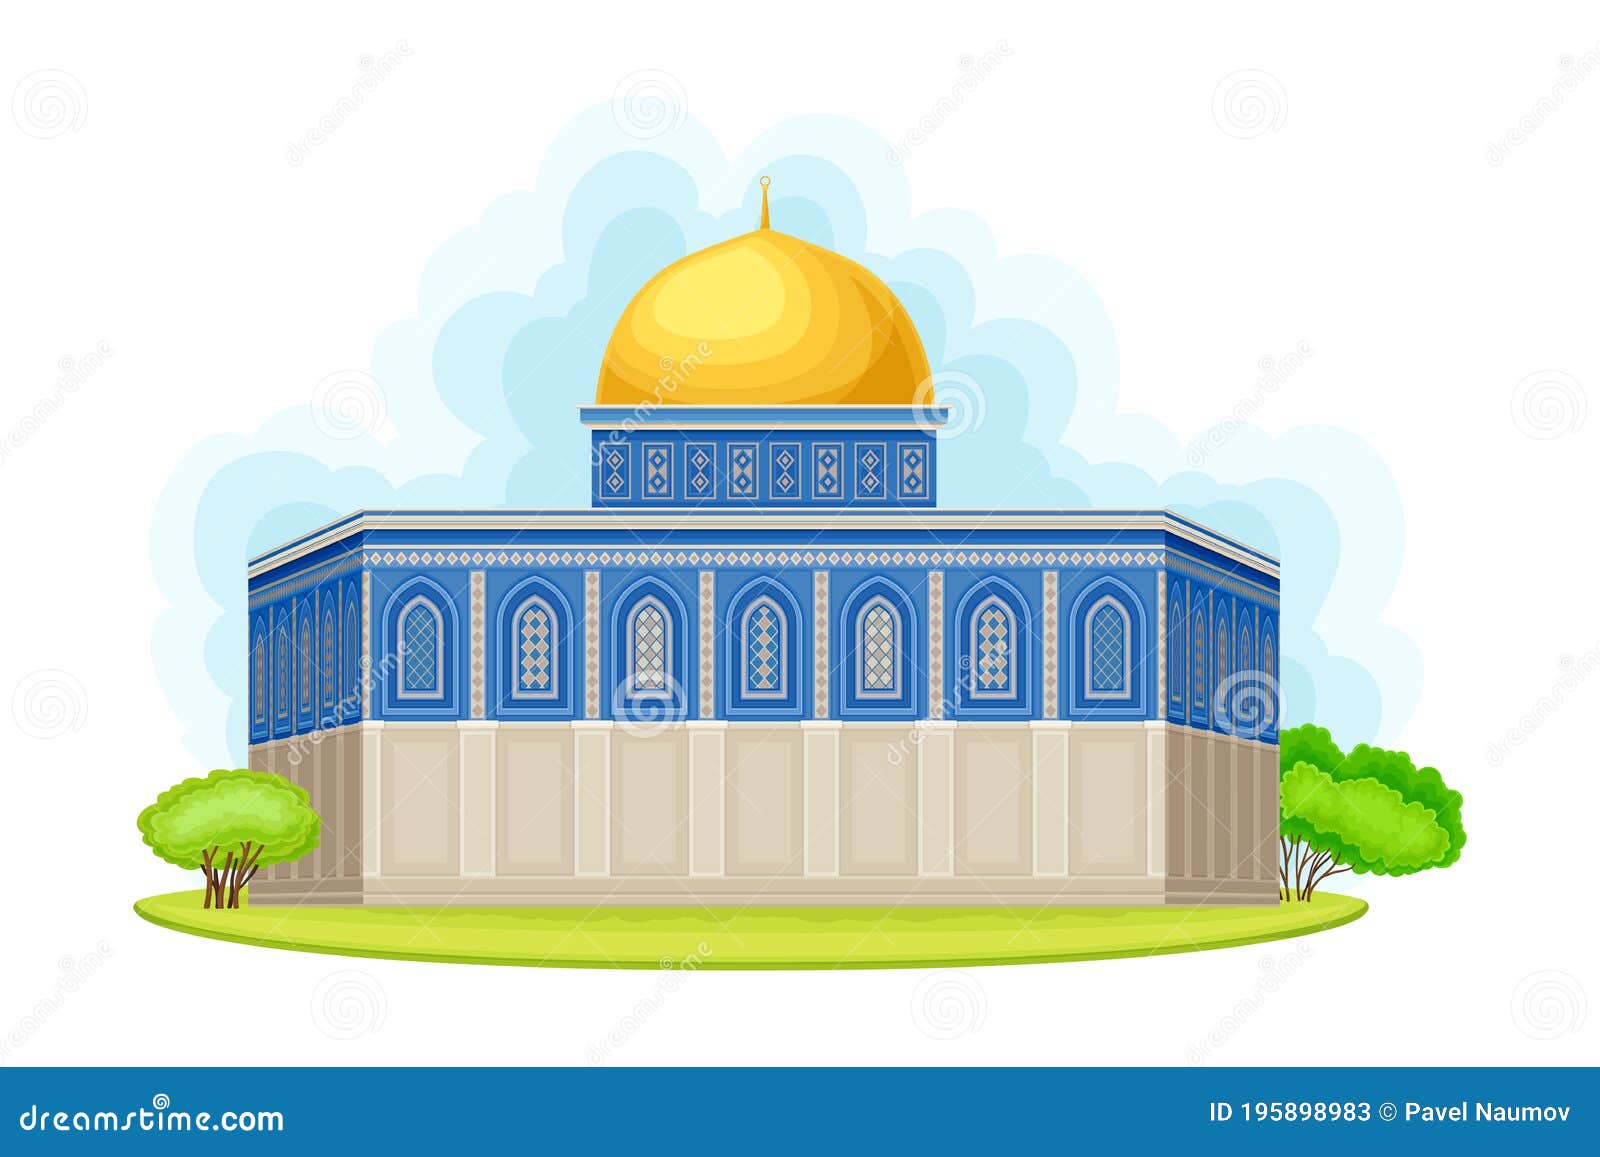 Dome Of The Rock As Shrine In Jerusalem Vector Illustration Stock